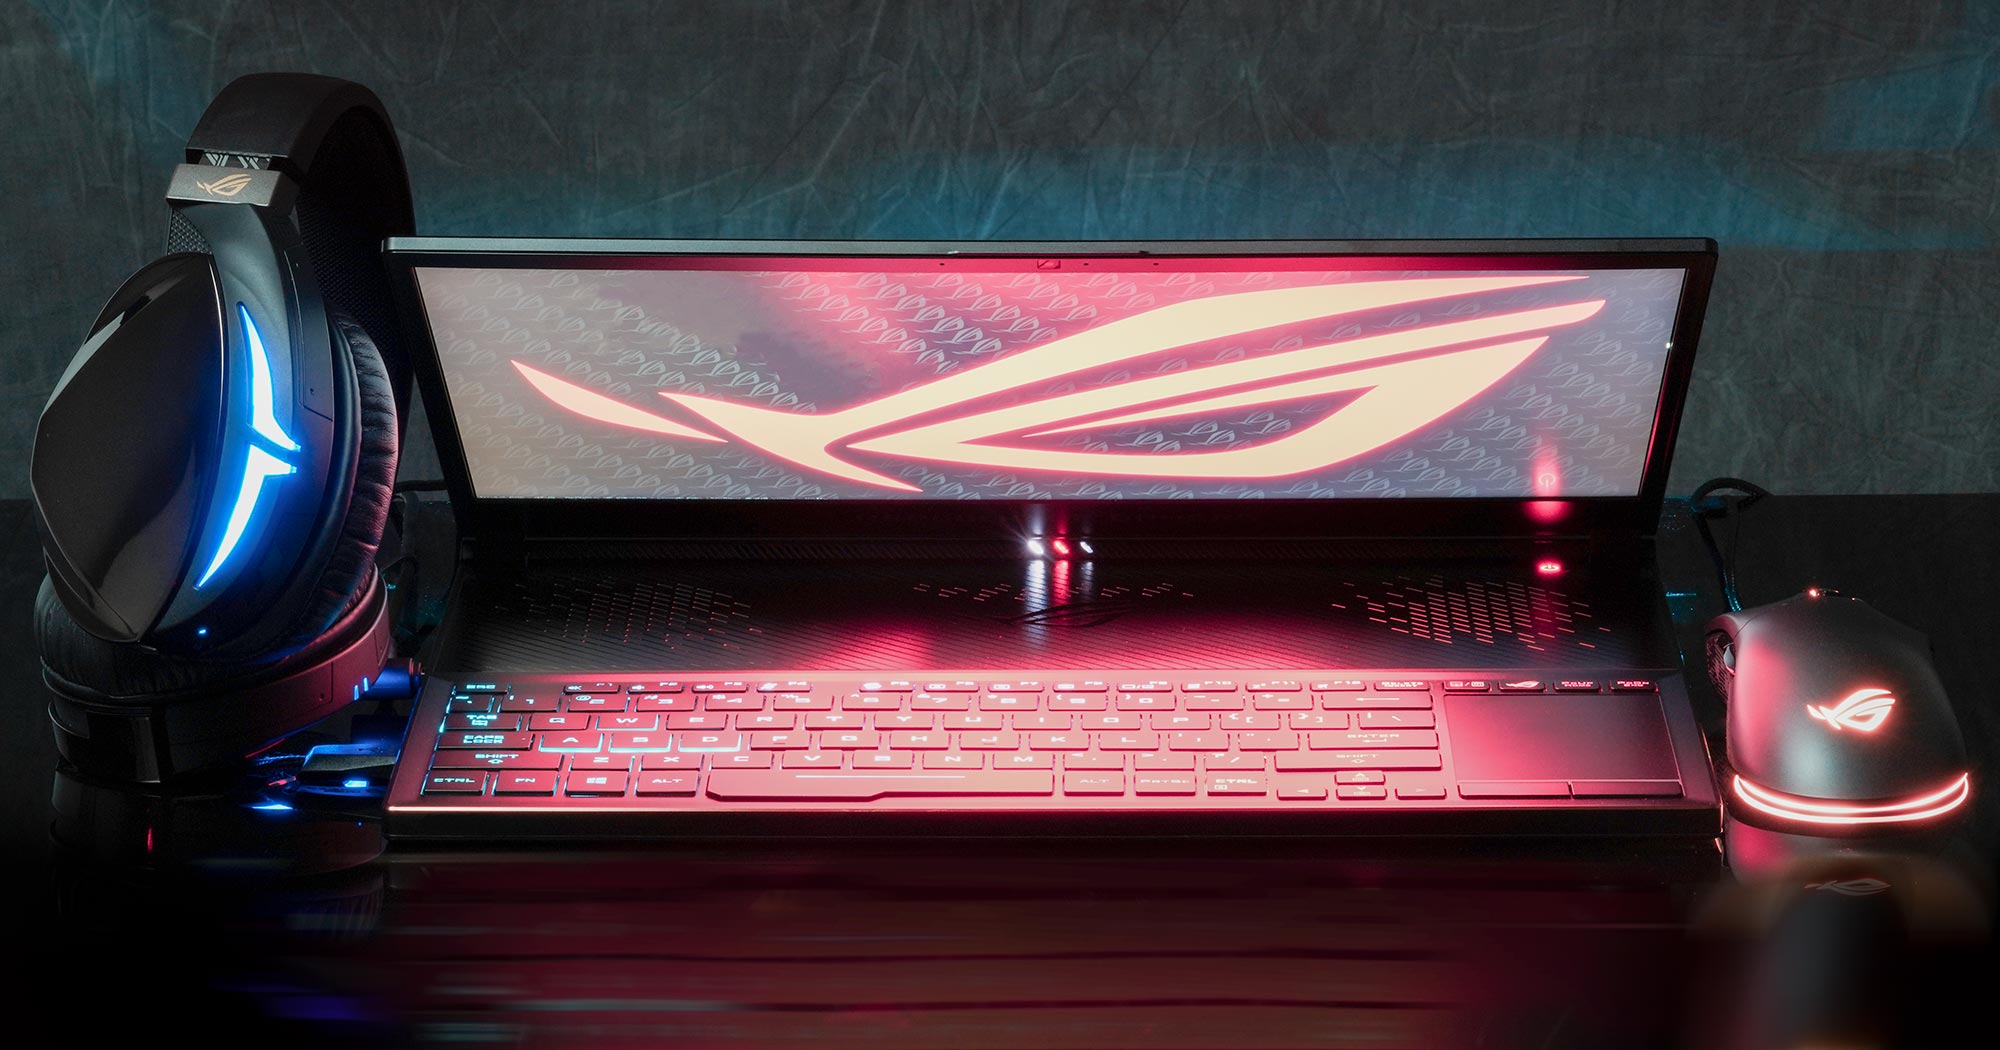 The ROG Zephyrus S sets a new standard for ultra-slim gaming laptops